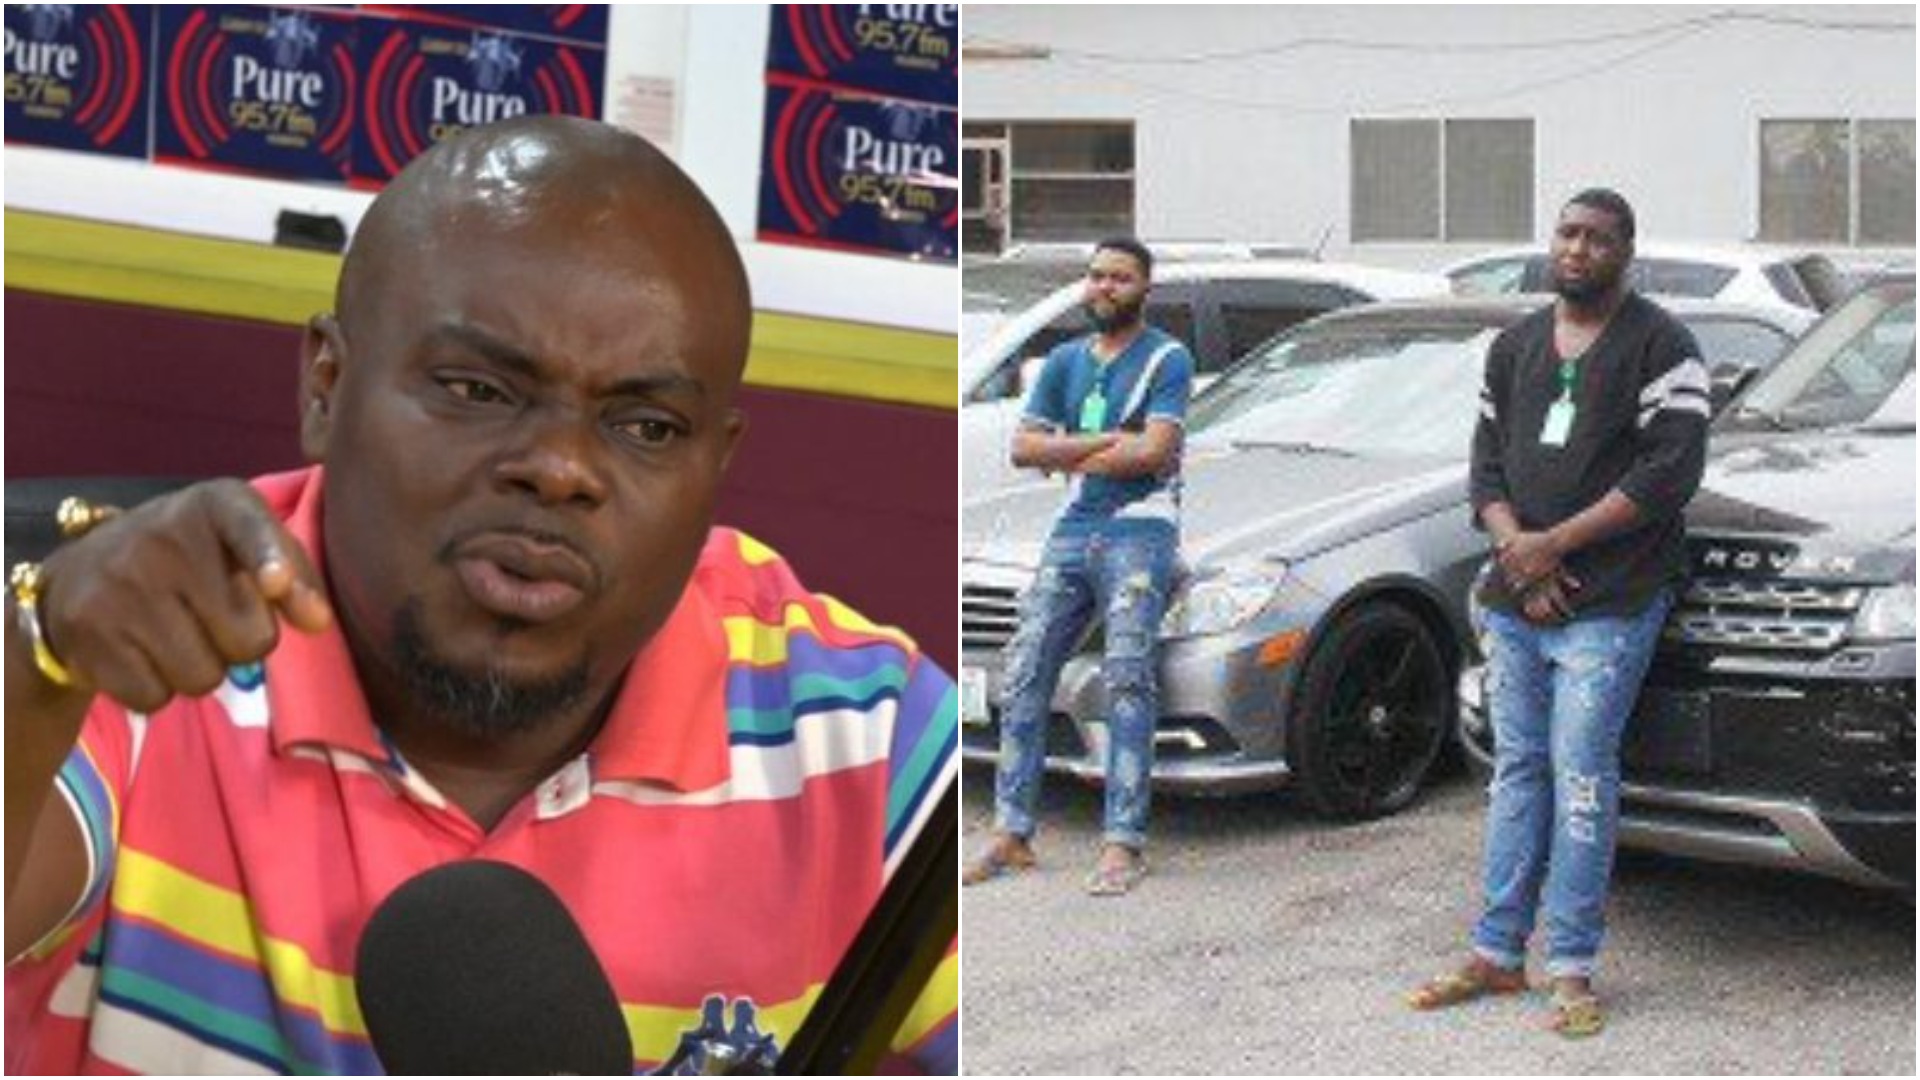 Let's investigate all Ghanaian men under 30 driving lavish cars - Suame MP